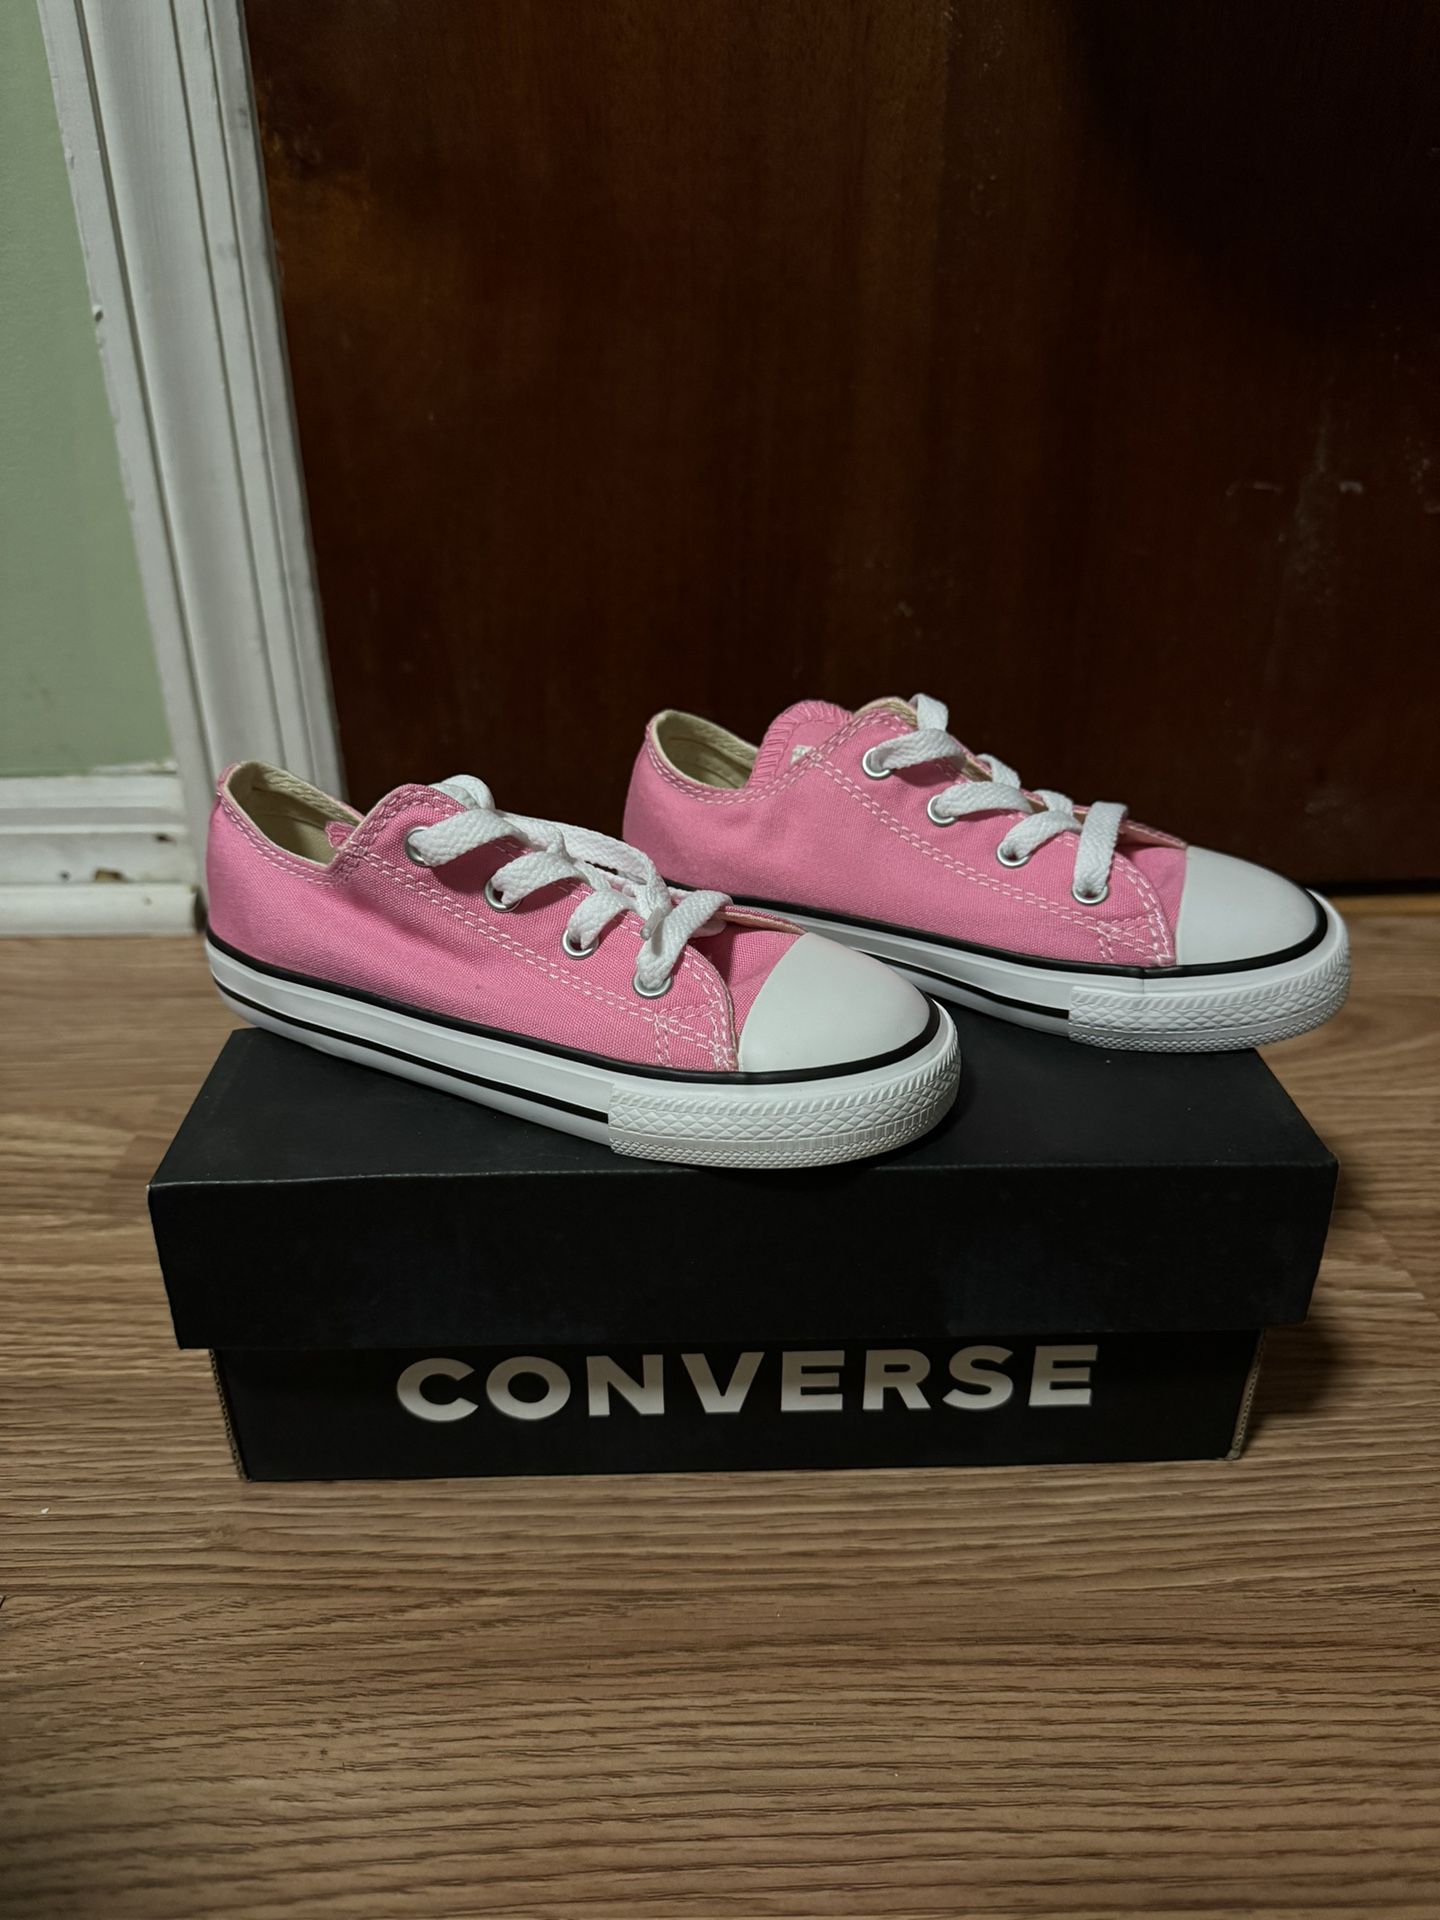 Converse Pink Size 10